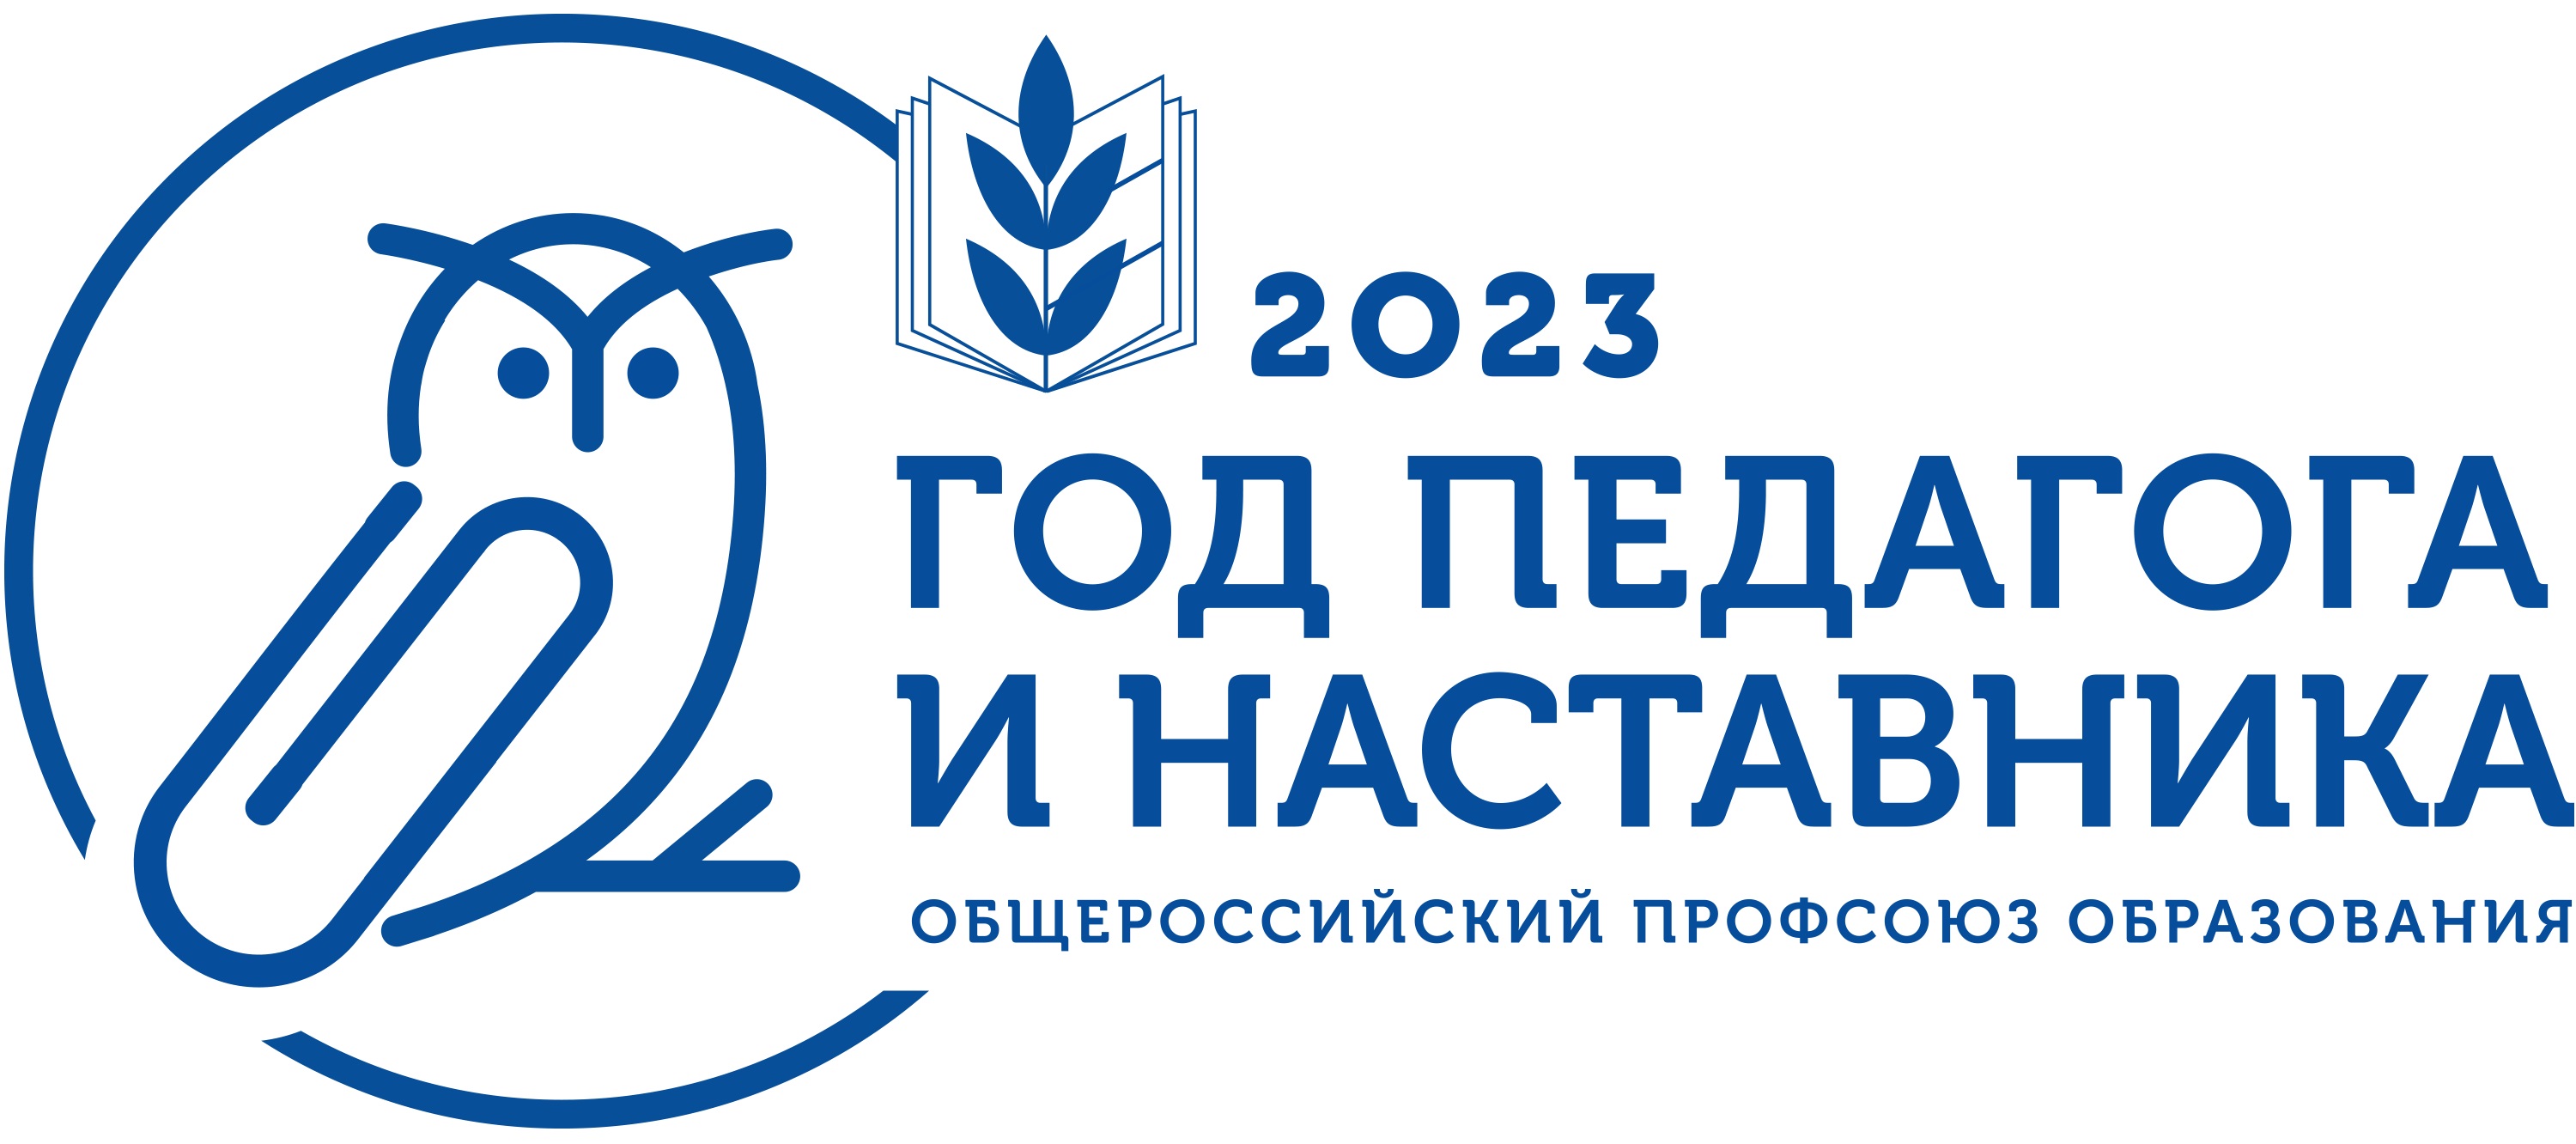 prof 2022